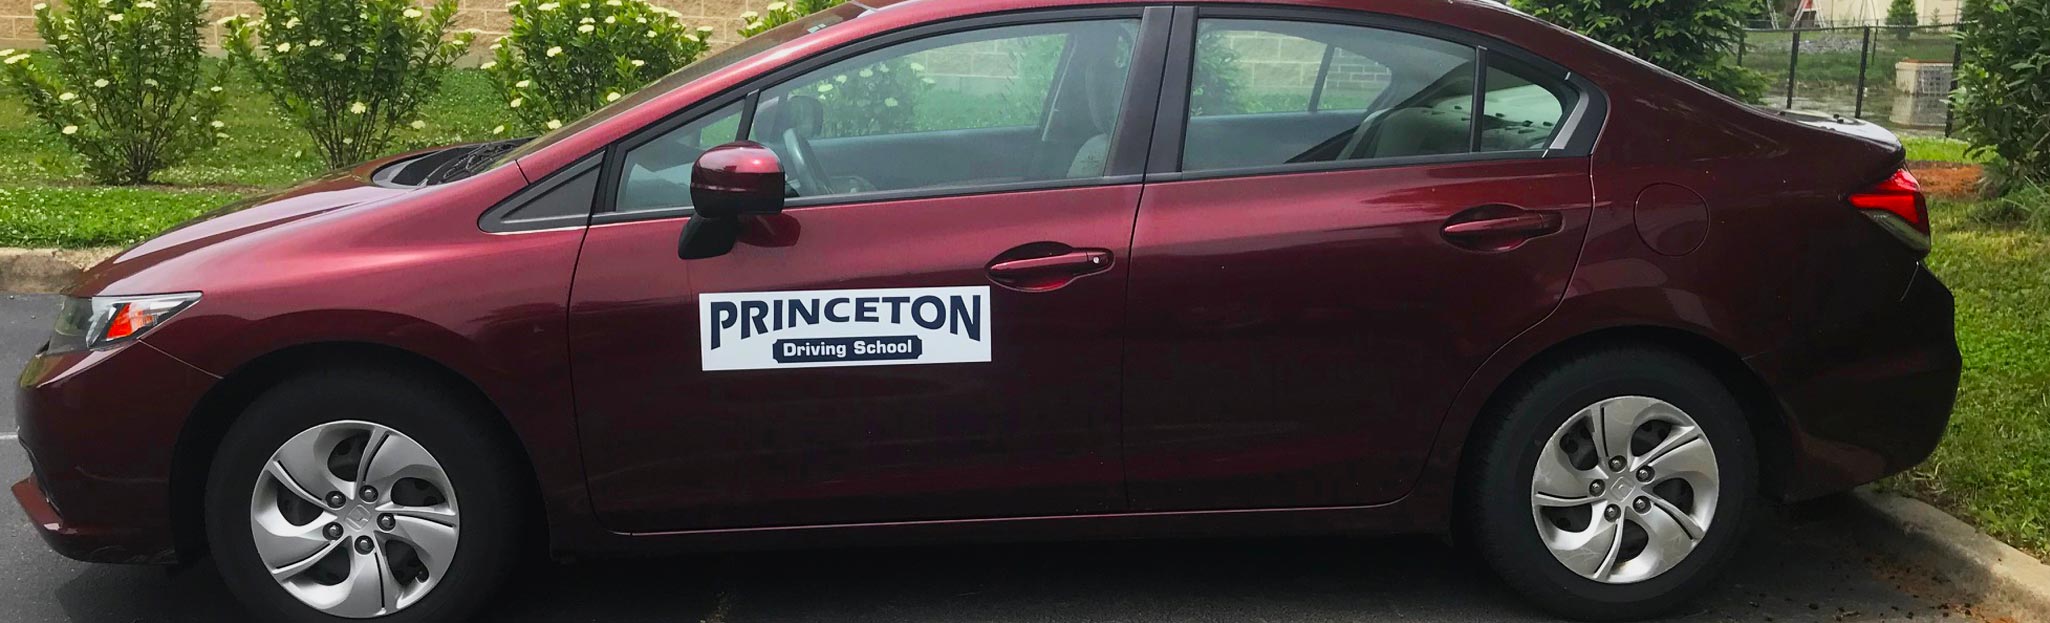 Princeton Driving School Our Programs